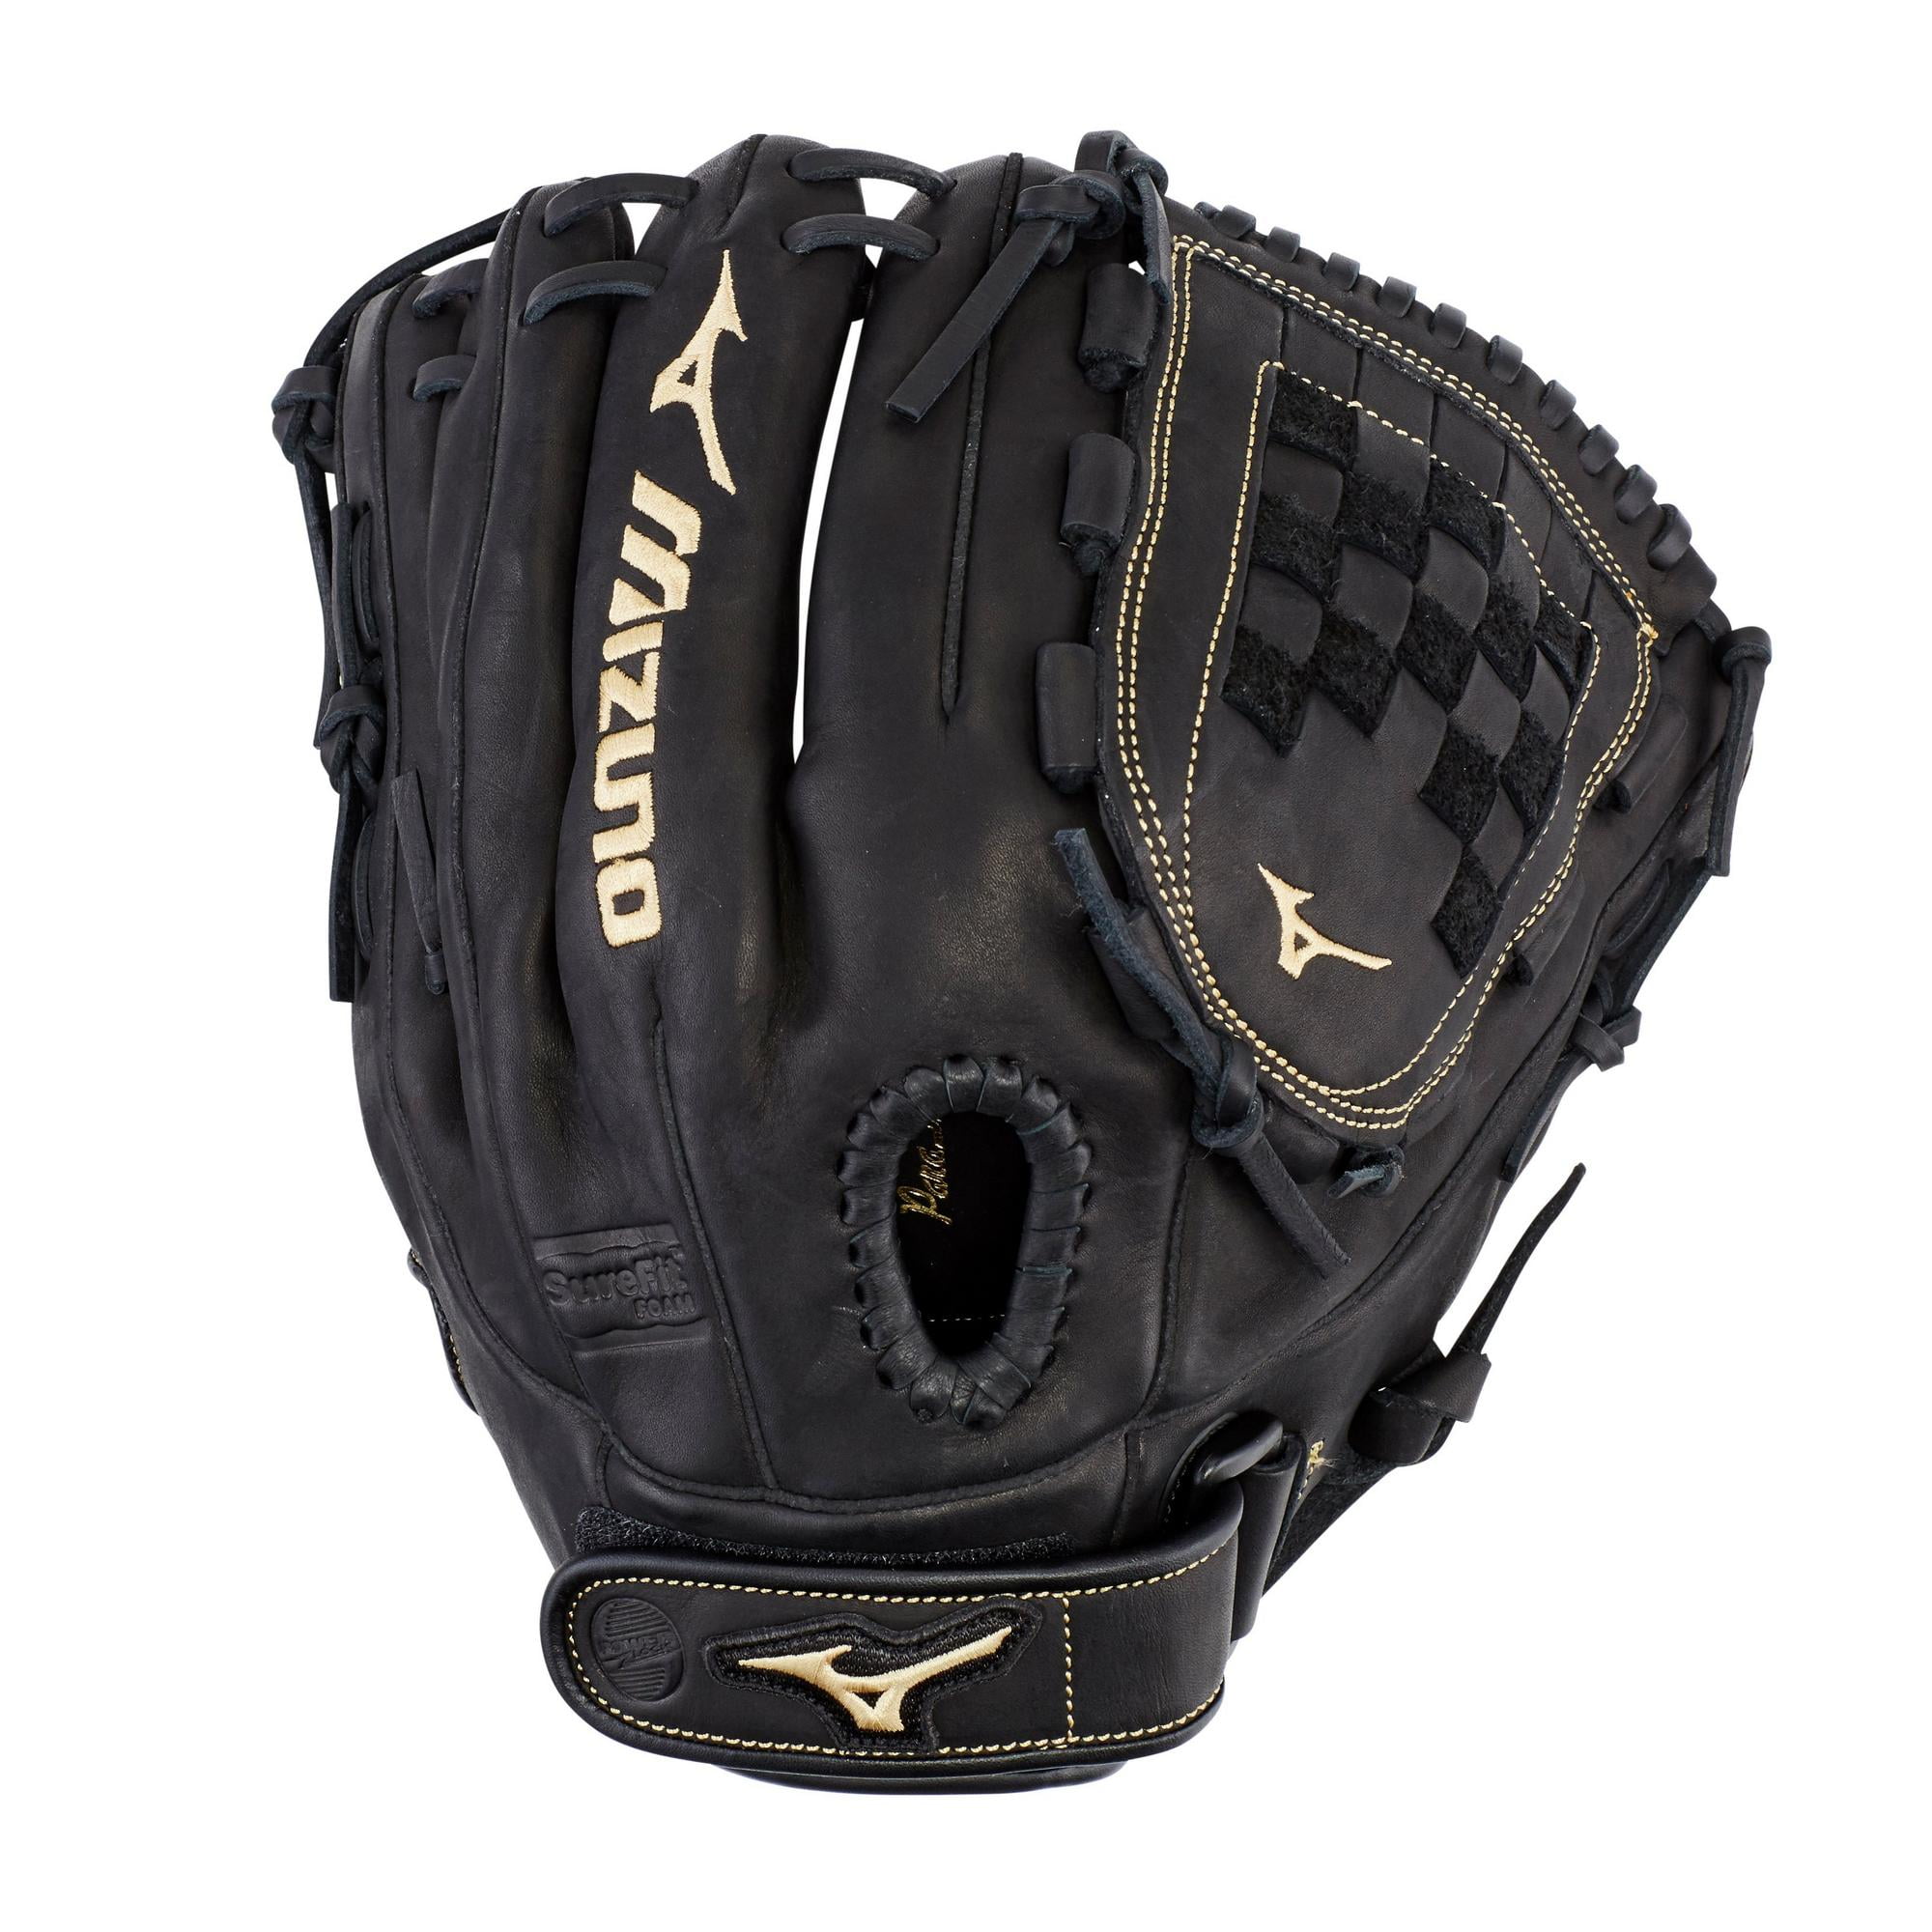 Mizuno GMVP-1201 12” Baseball Softball Glove Right Hand Throw New Without Tags 